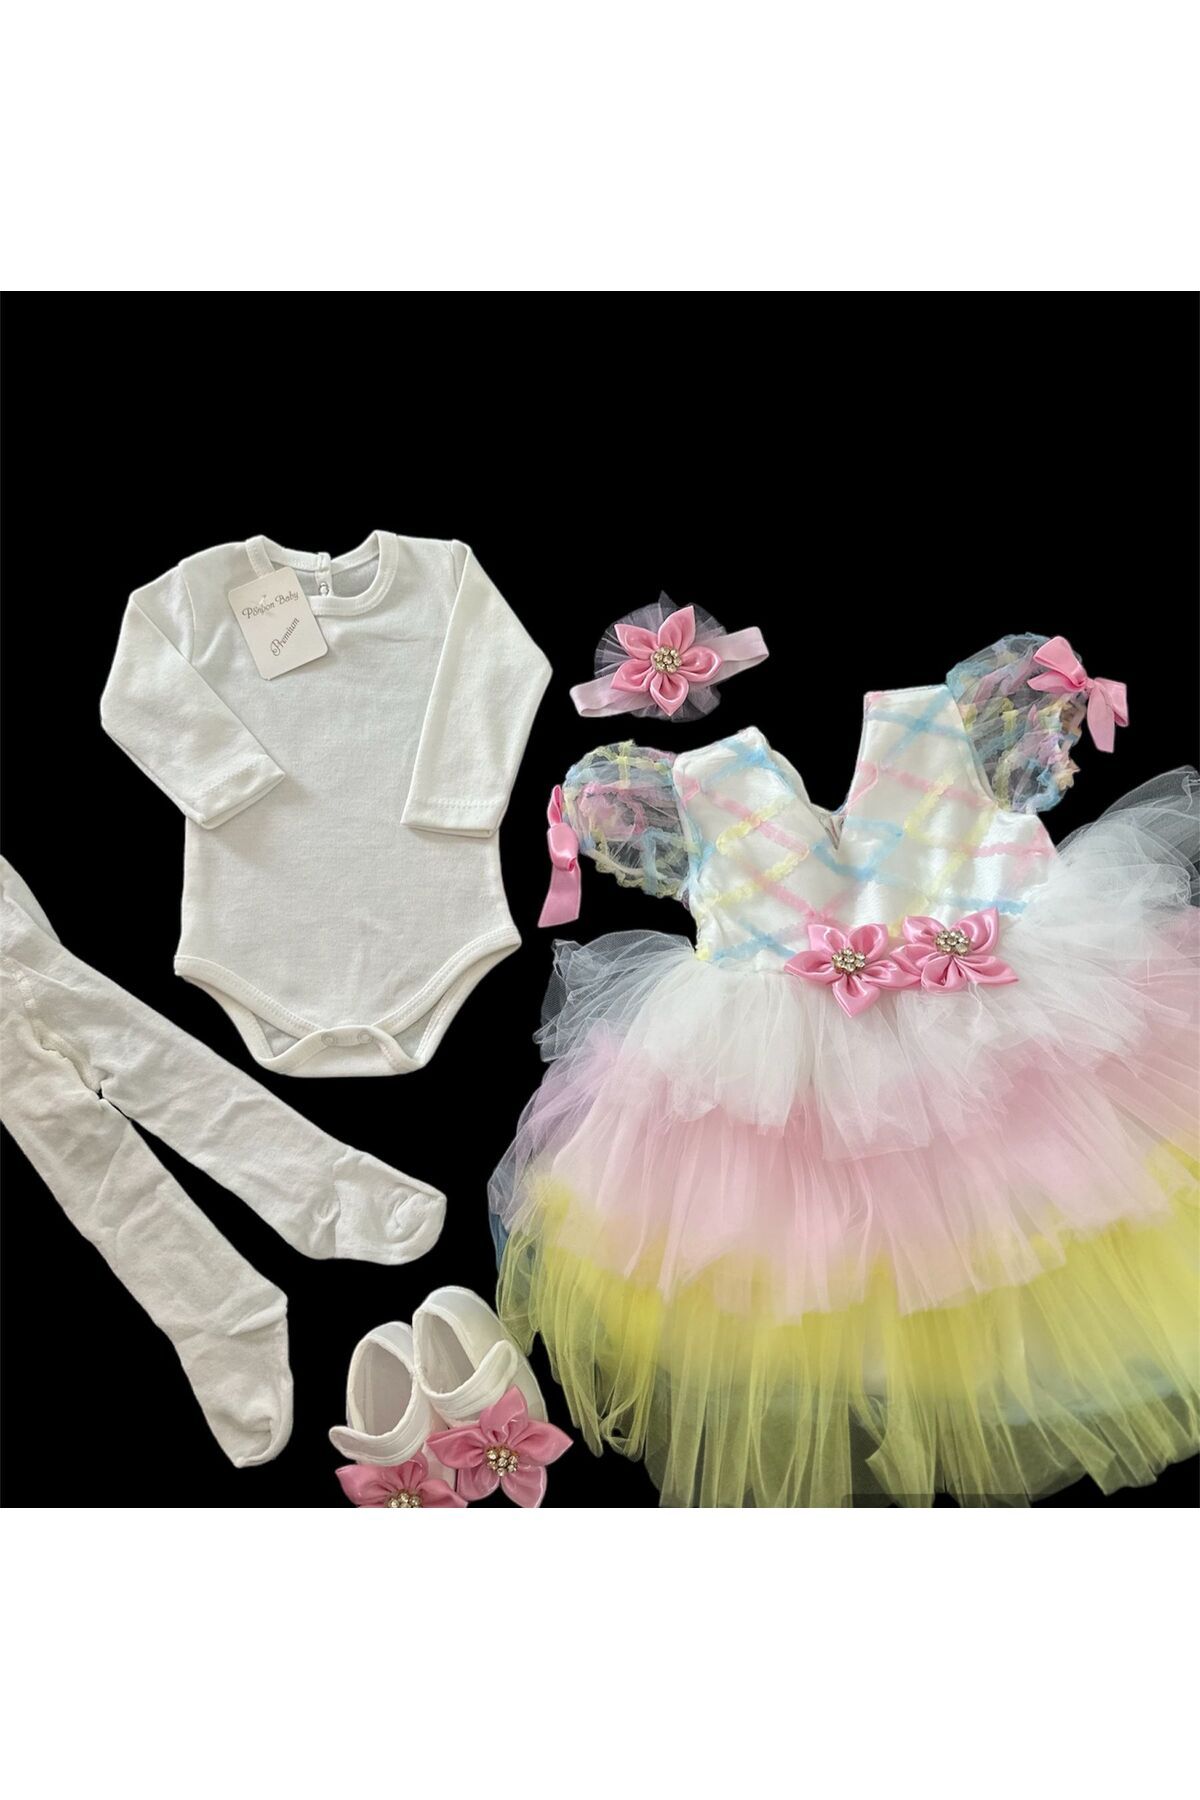 Ponpon Baby Kız bebek renkli katkat tüllü prenses elbisesi mevlüt elbisesi